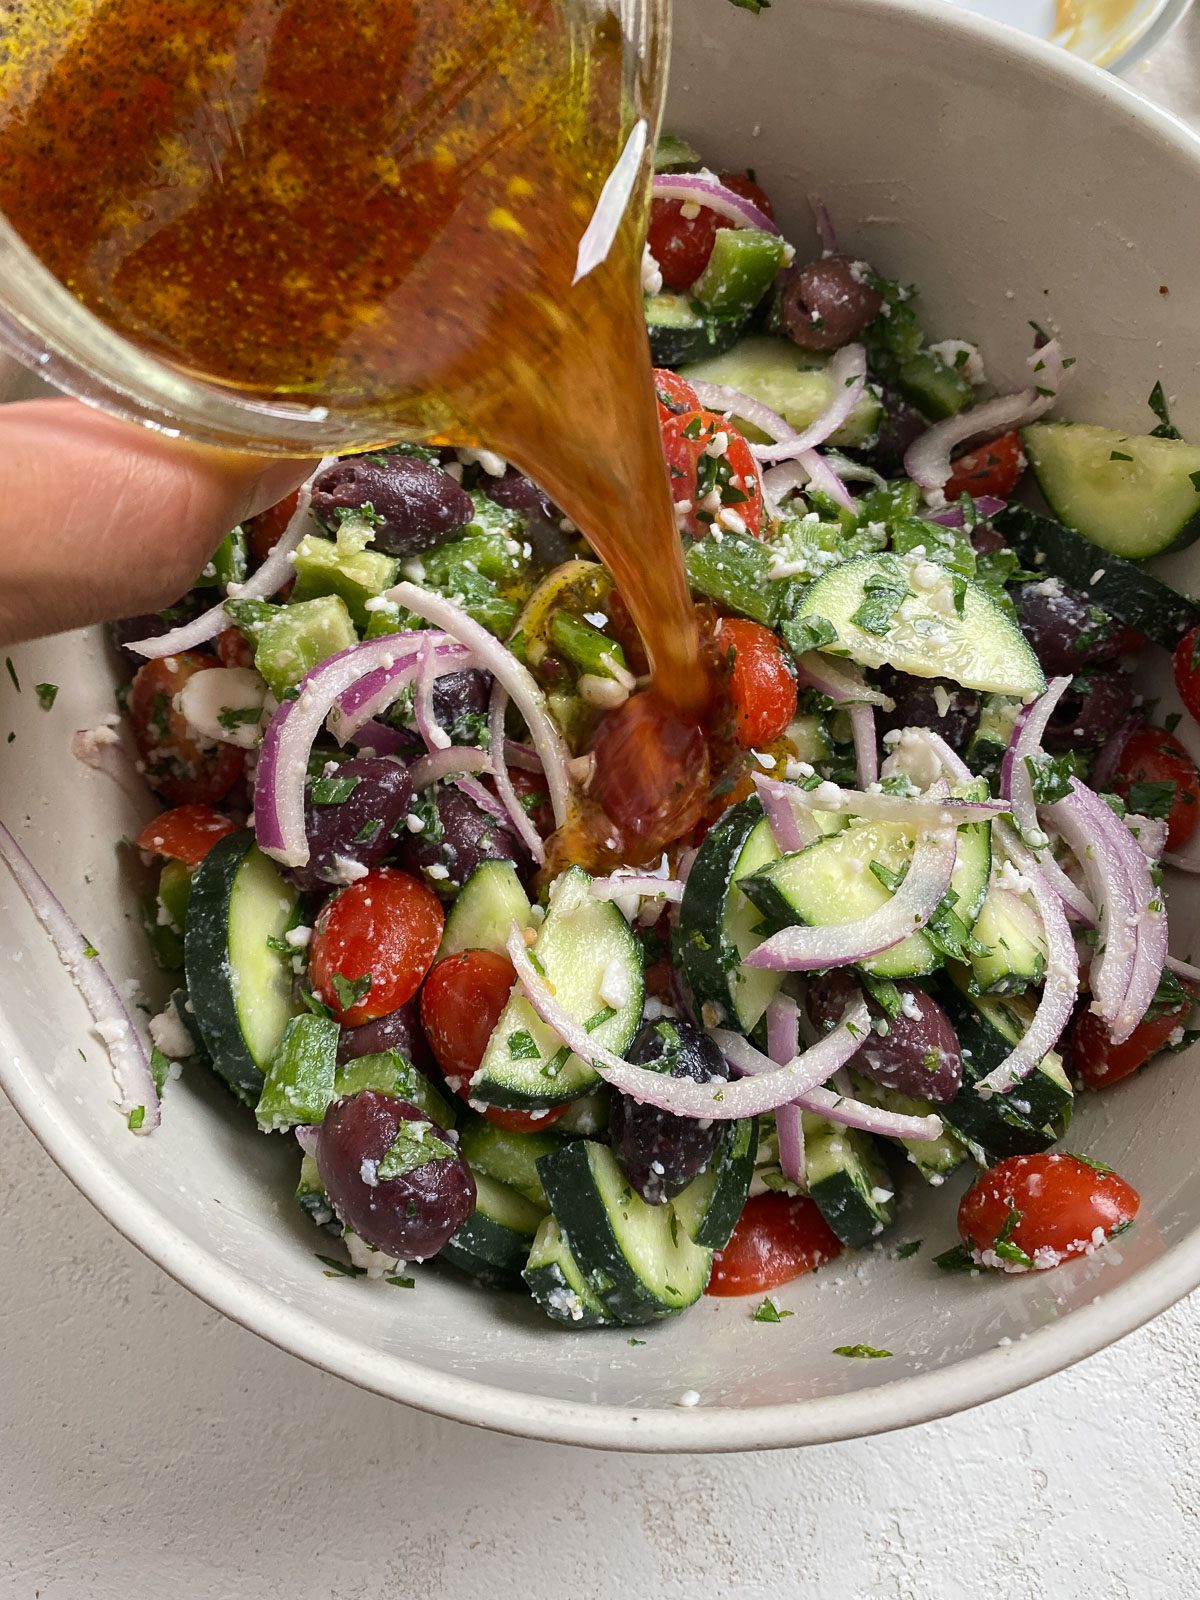 process shot showing the pouring of dressing onto bowl of vegan greek salad